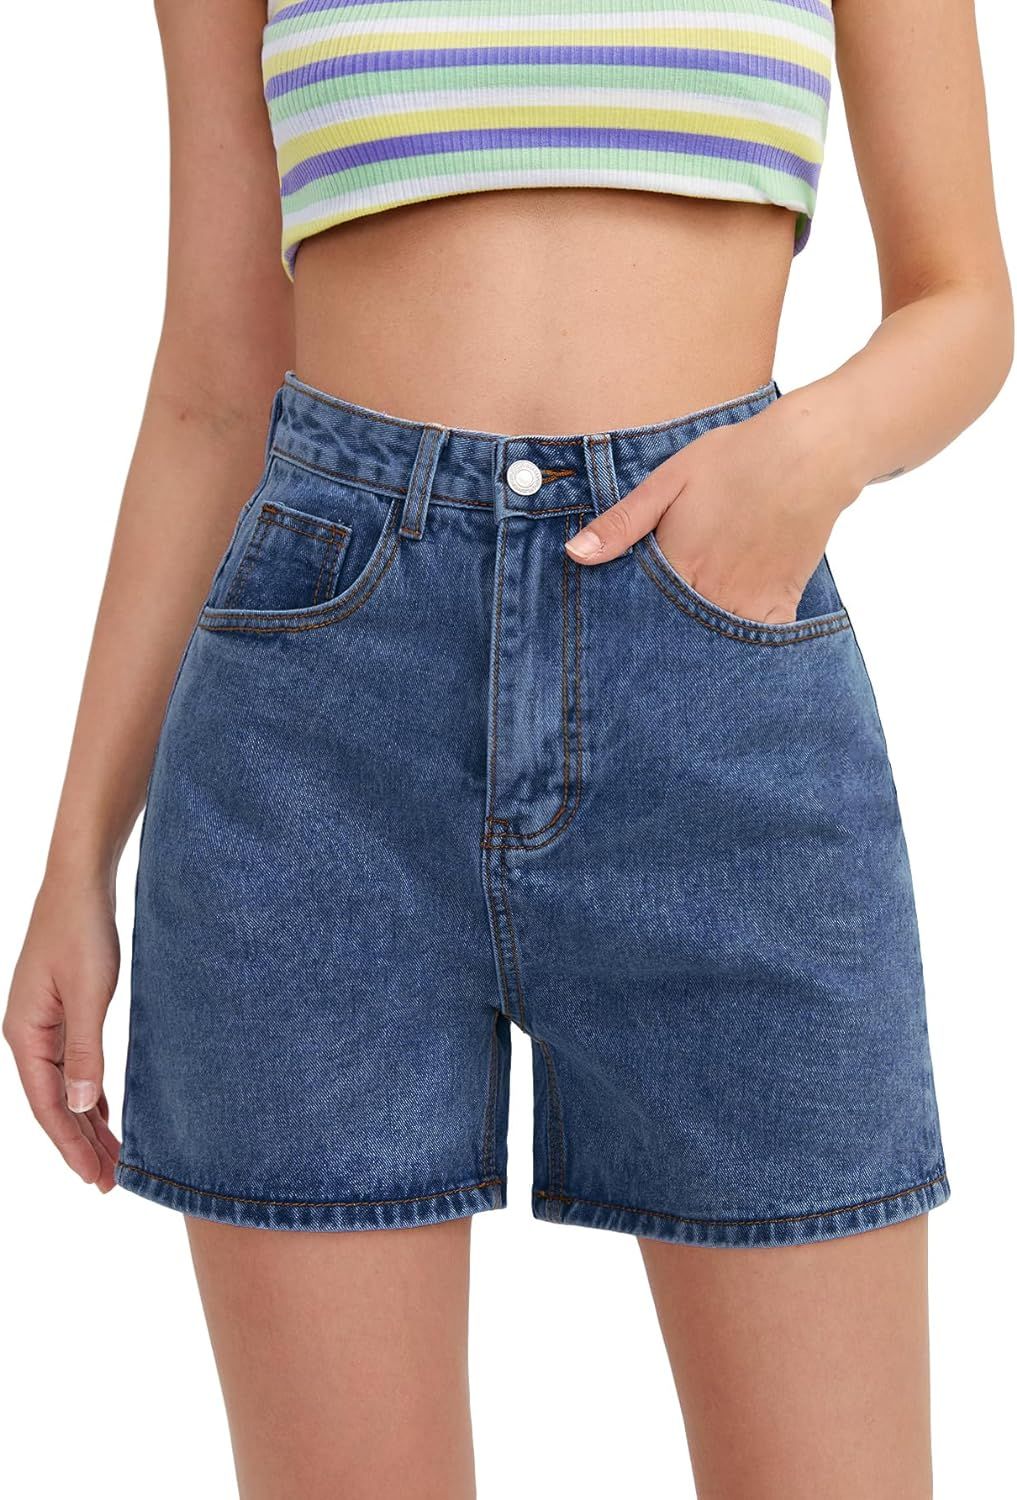 SweatyRocks Women's High Waist Straight Leg Denim Shorts Solid Jean Shorts Summer Hot Pants with ... | Amazon (US)